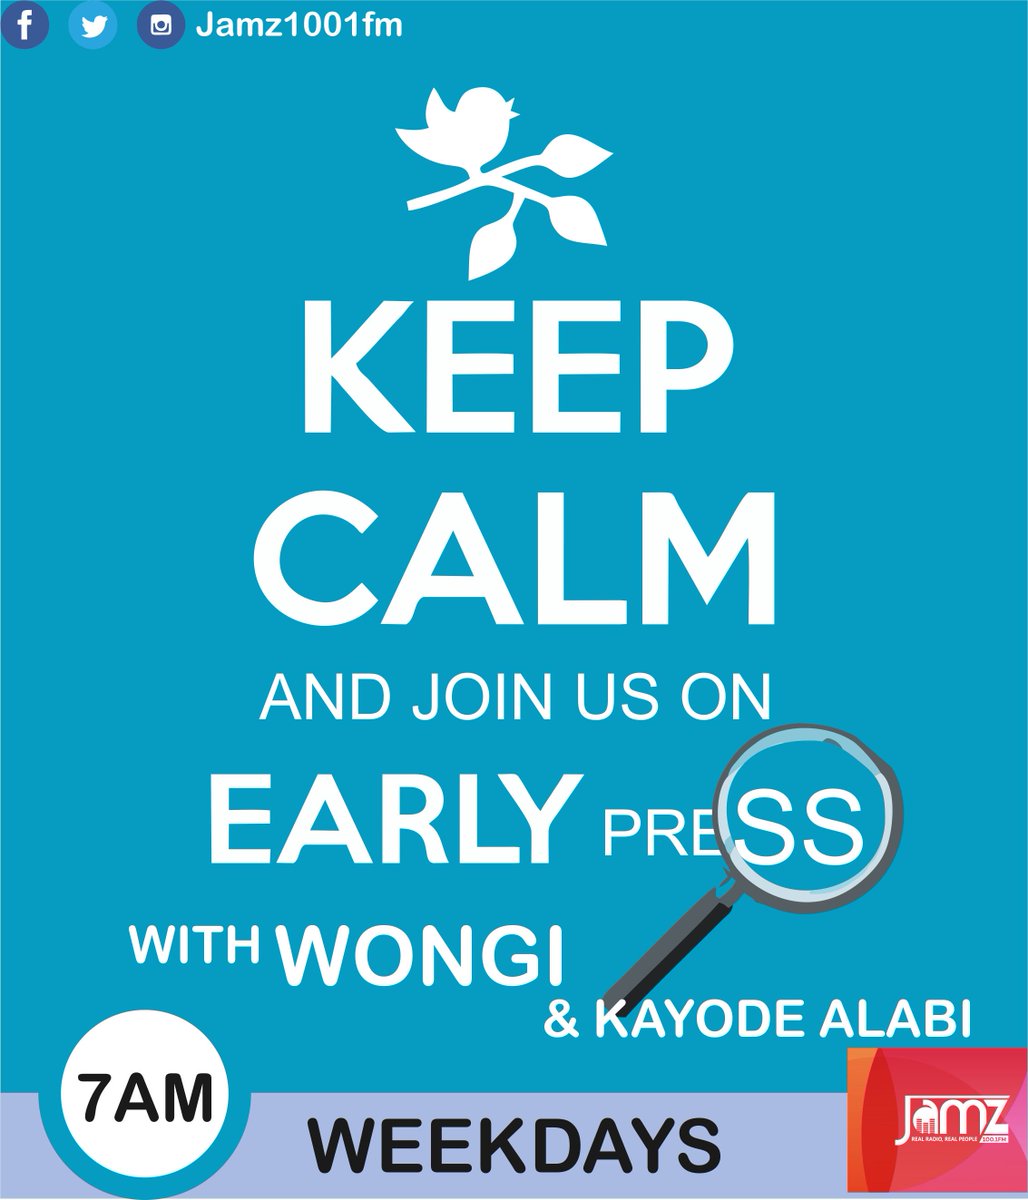 Connect W/ @wongiwongi & Kayode Alabi On EarlyPress tomorrow (7AM) for- #News #BreakingNews #Opinions #JAMZ1001FM #RealTimeInformation